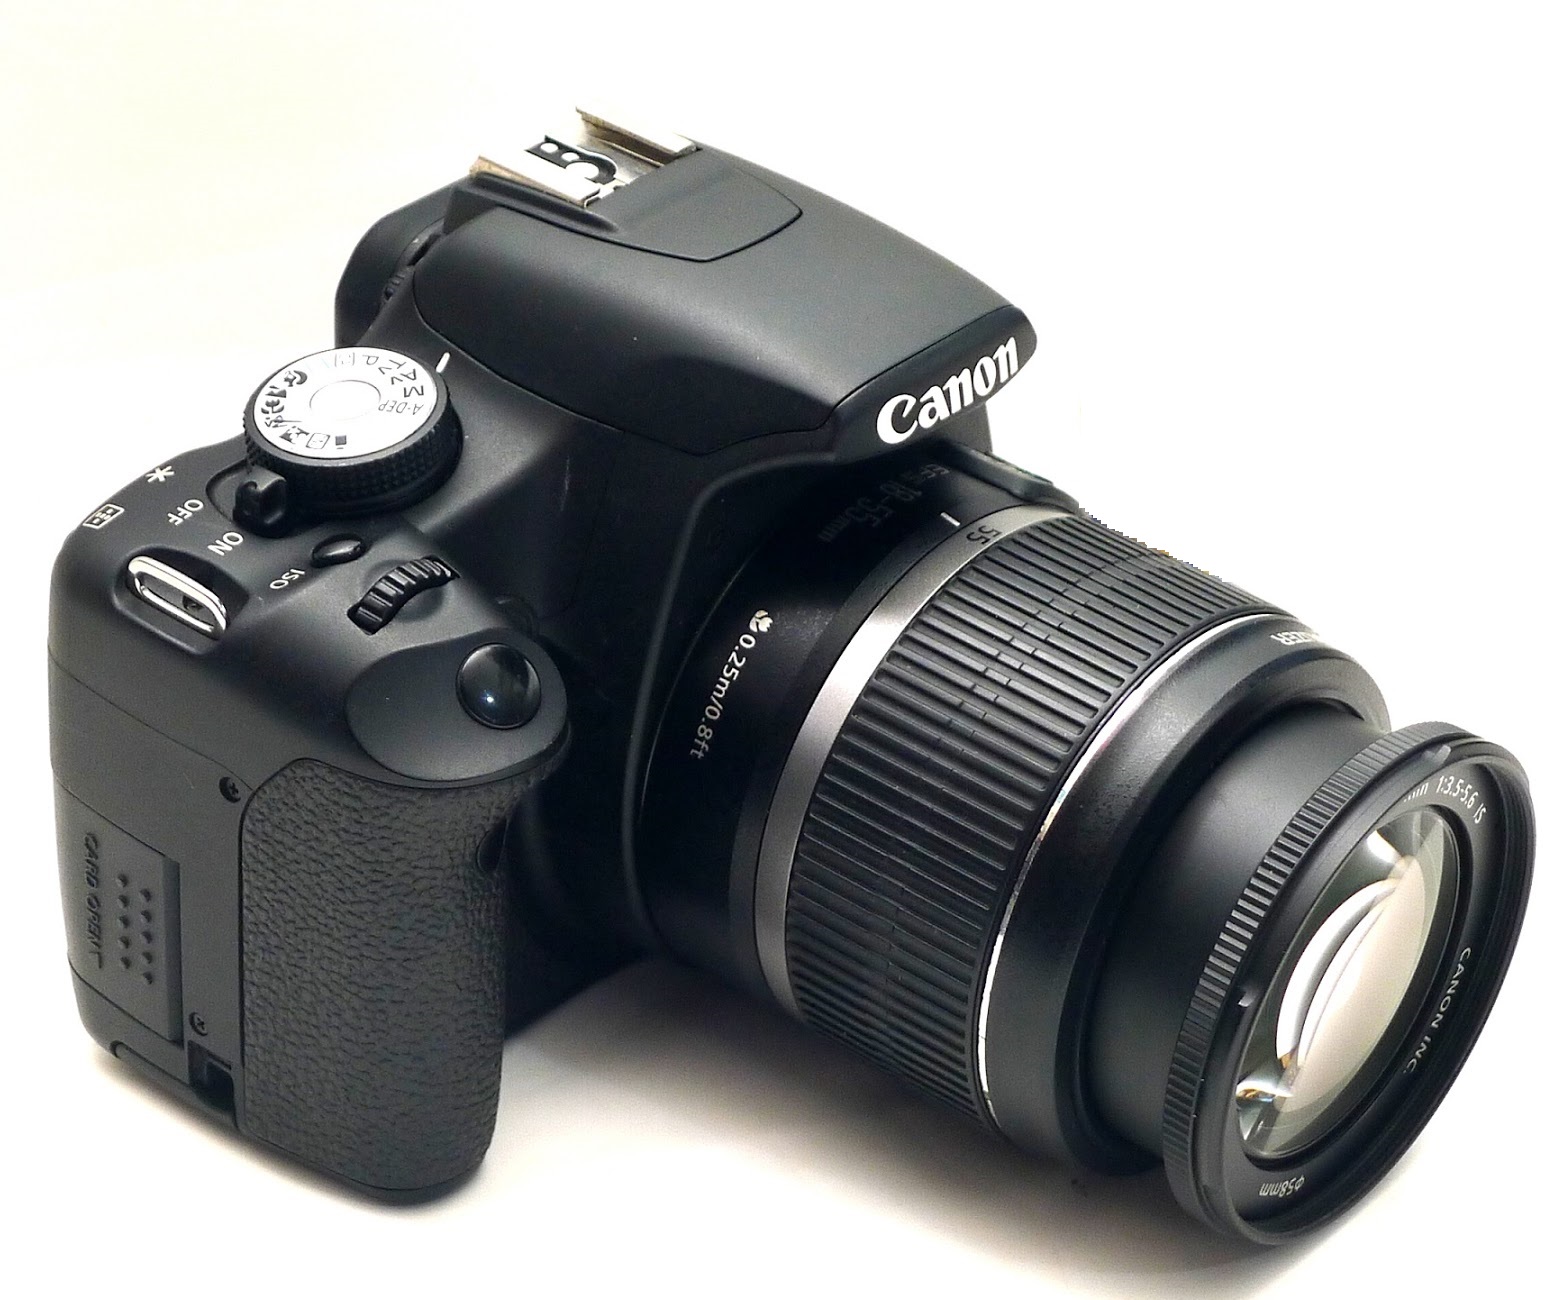  Jual  Kamera  Canon Eos 500D Bekas Jual  Beli  Laptop 